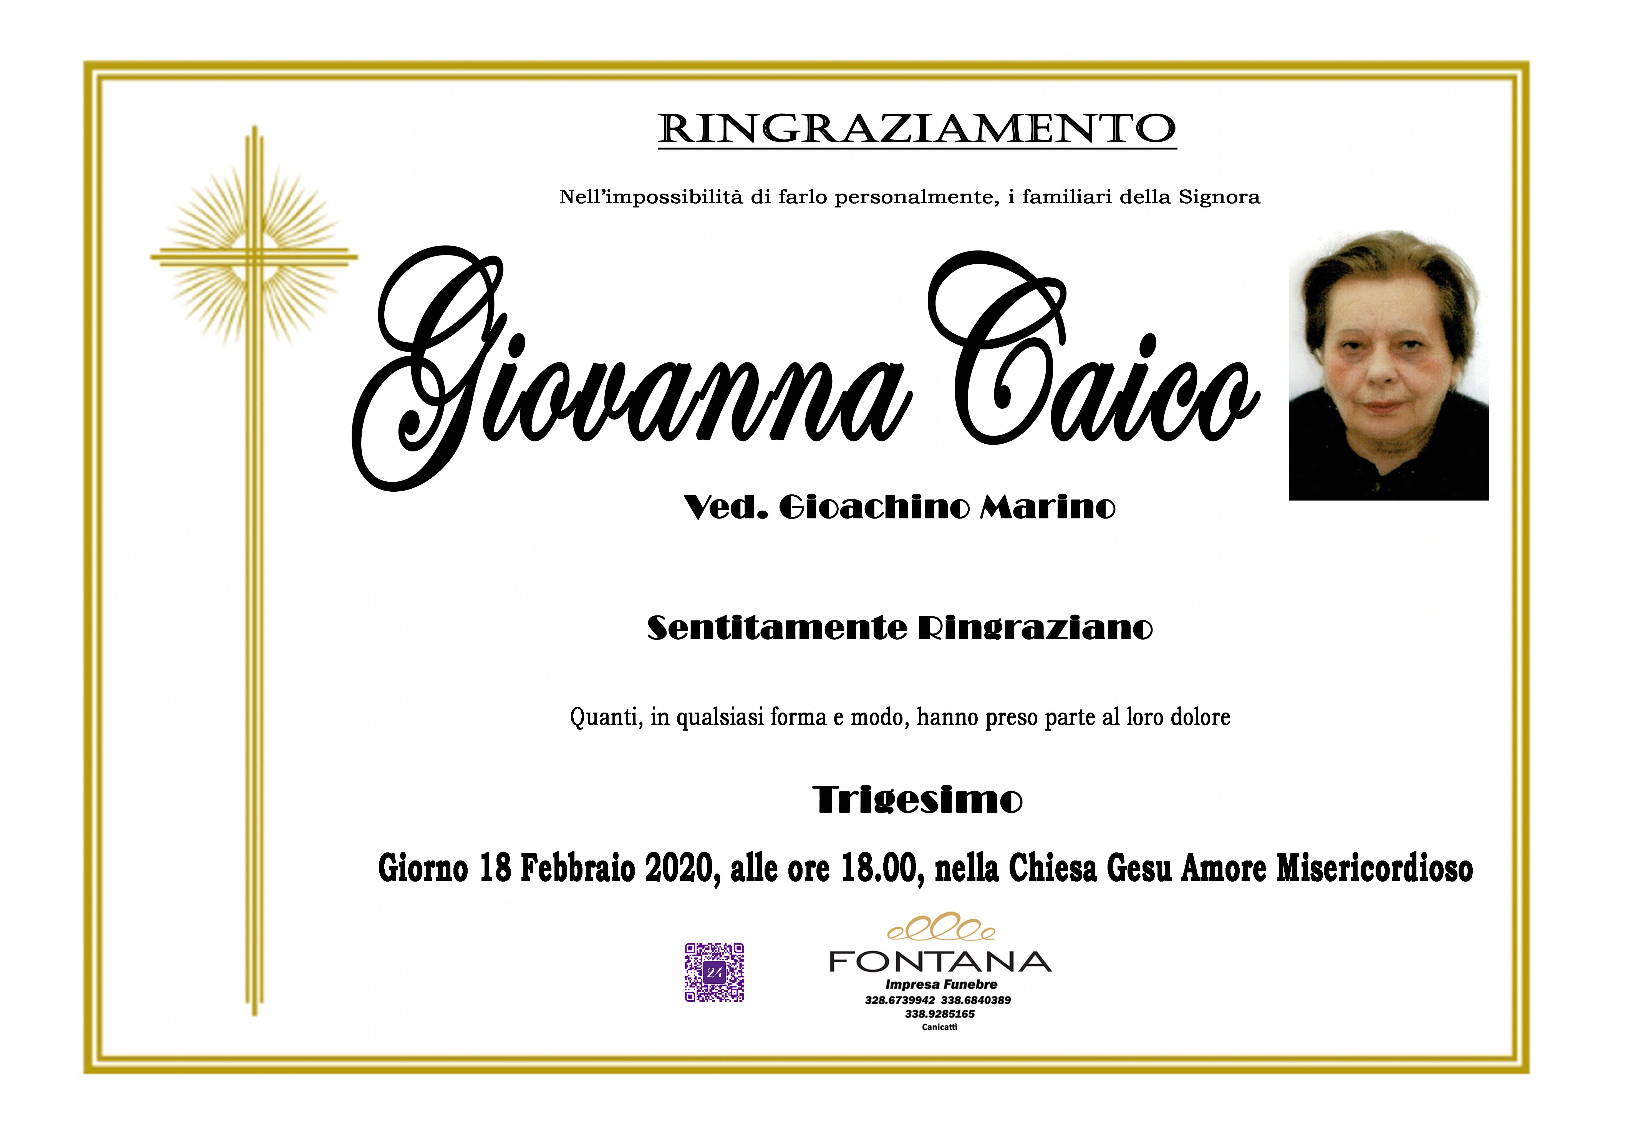 Giovanna Caico